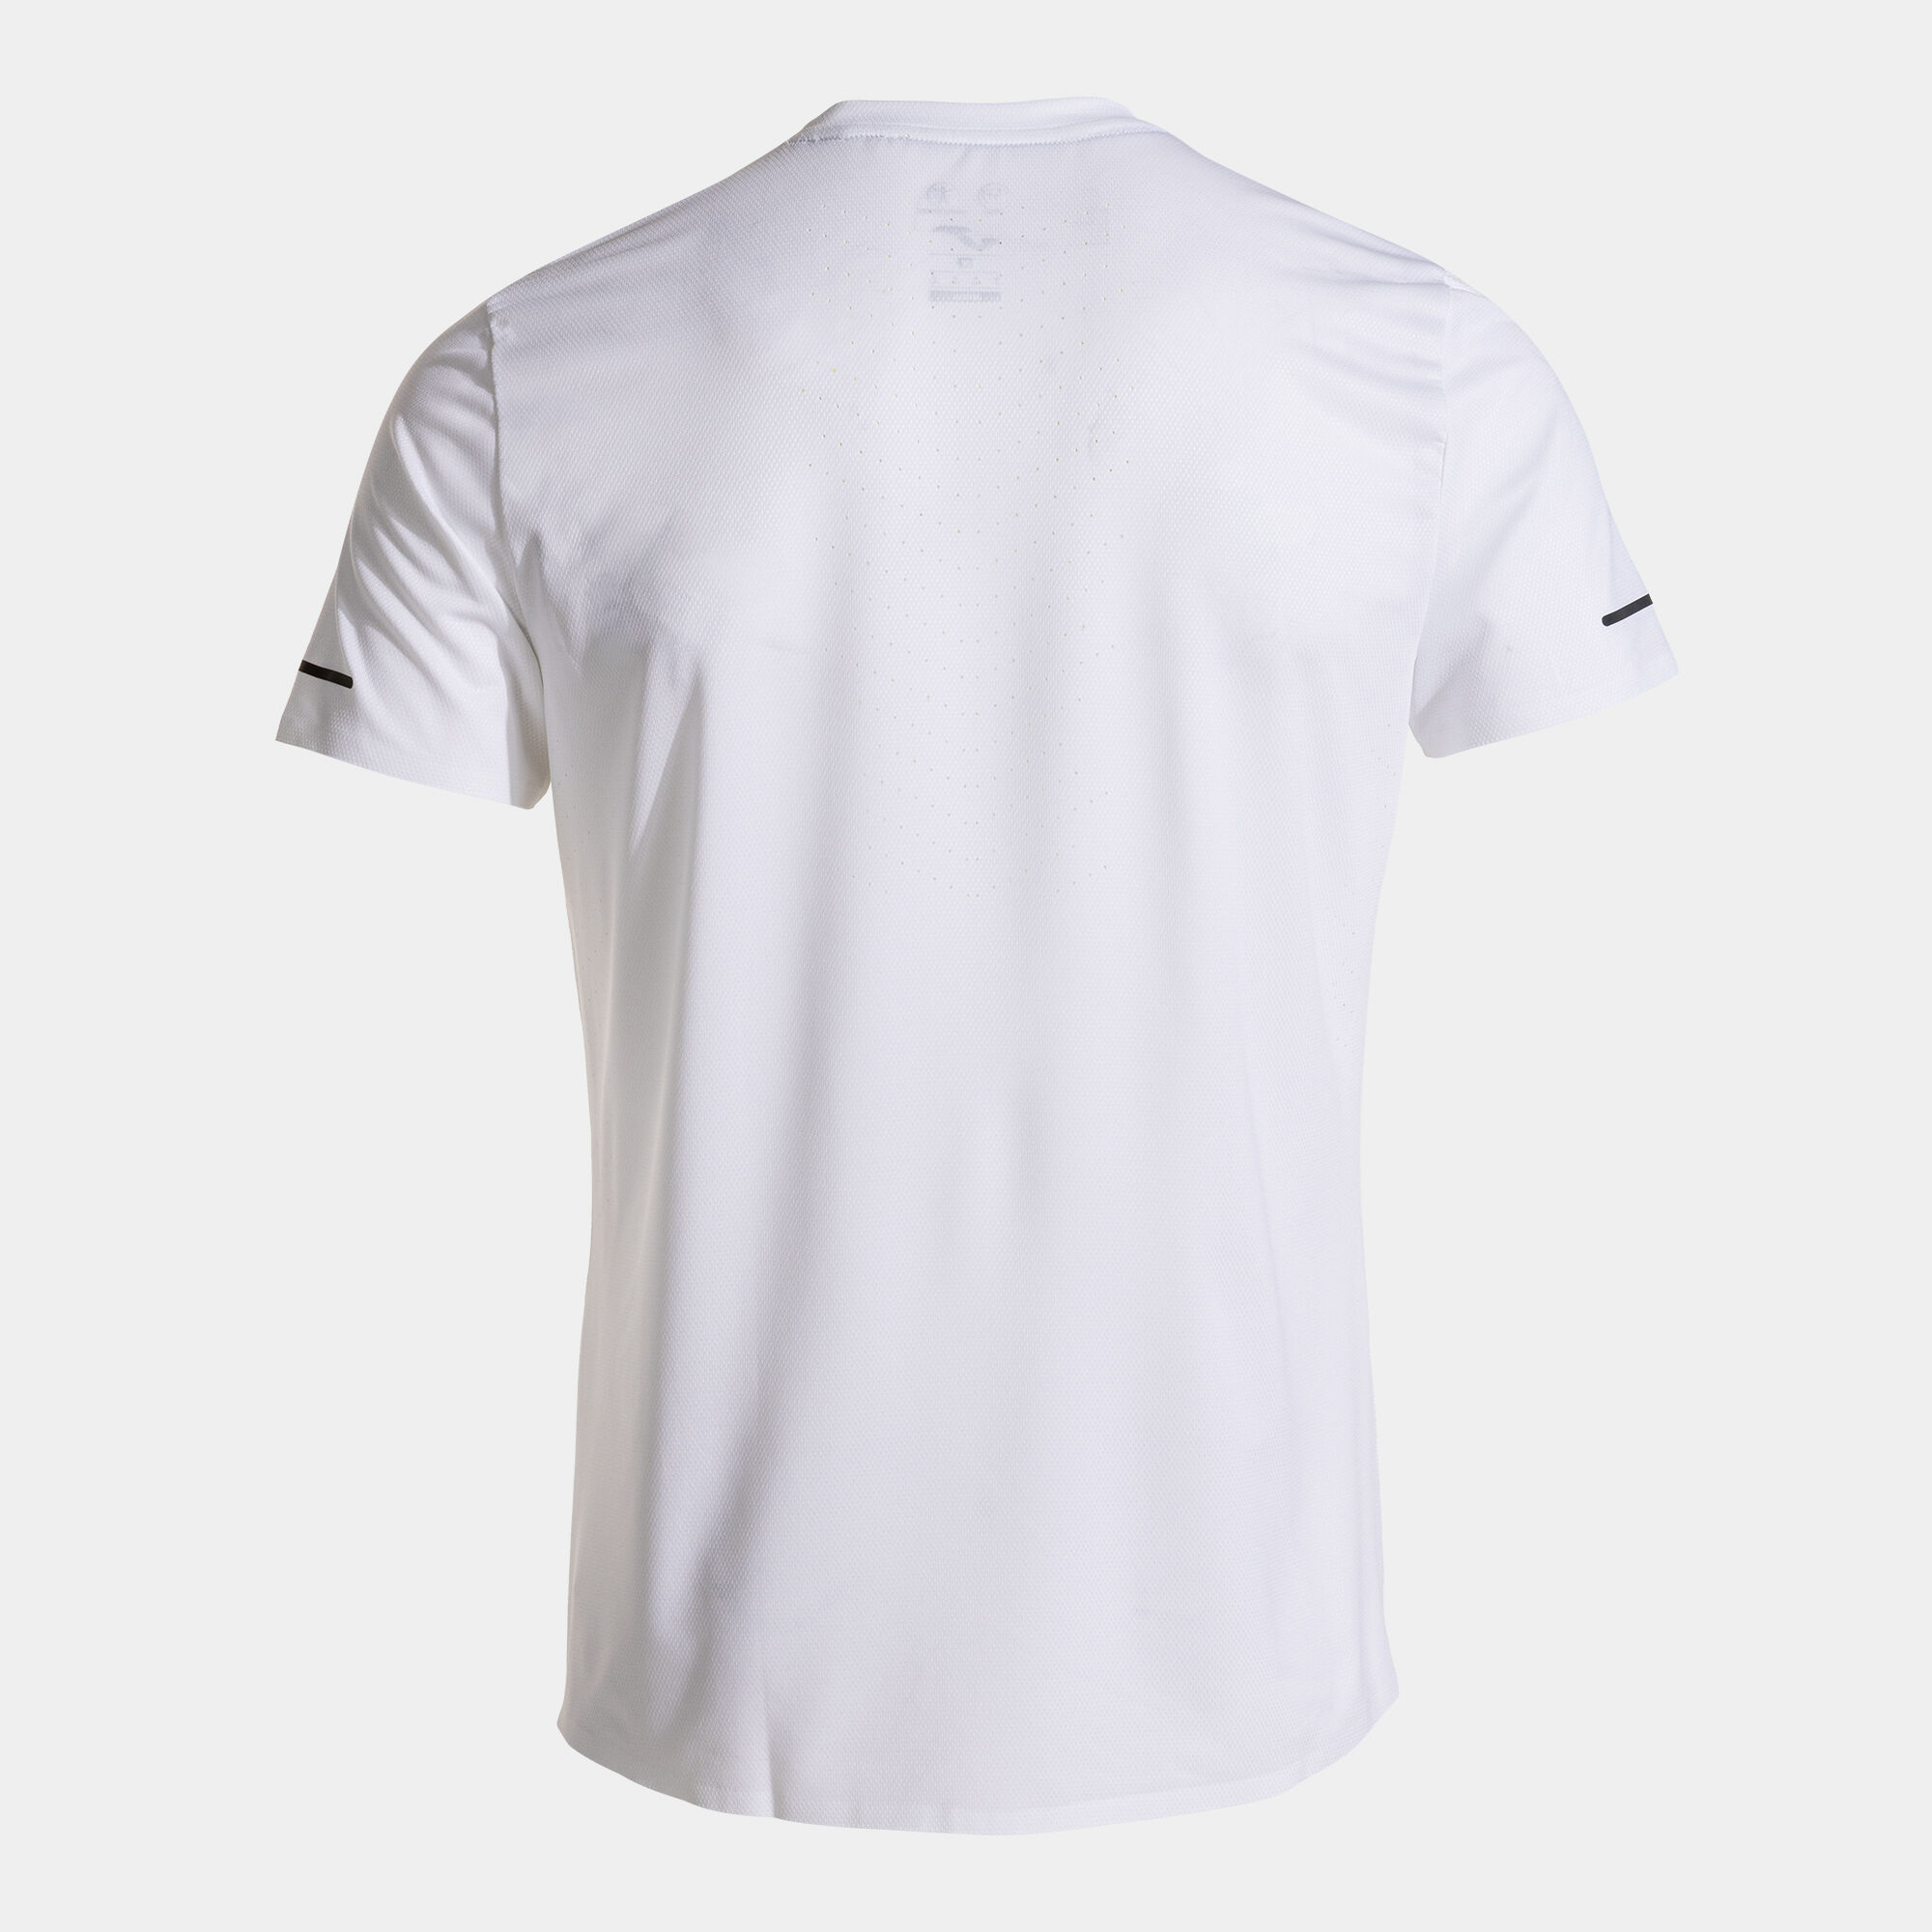 Camiseta manga corta hombre Ranking blanco